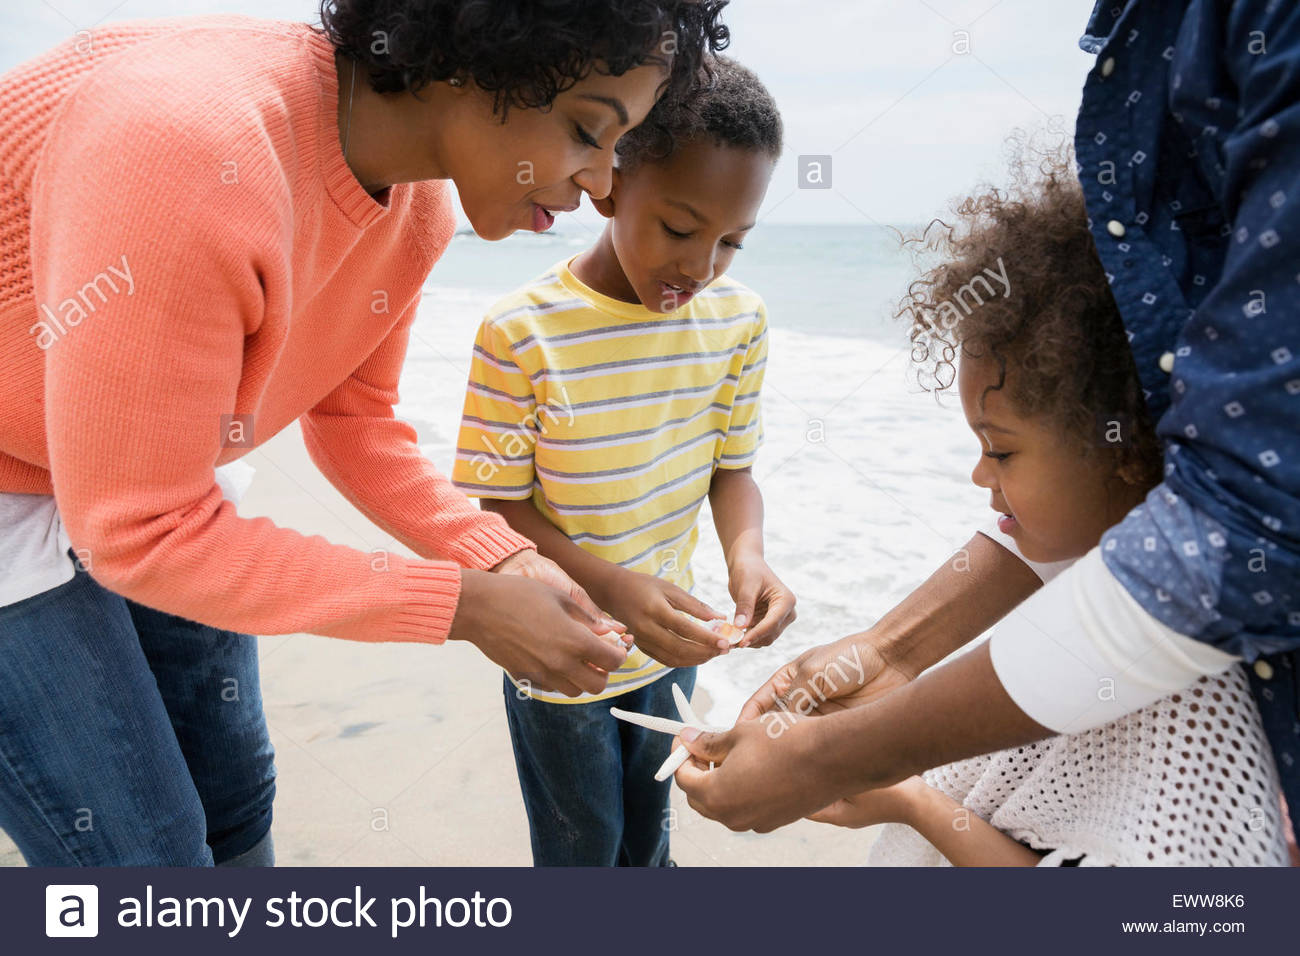 Family gathering seashells on beach Stock Photo